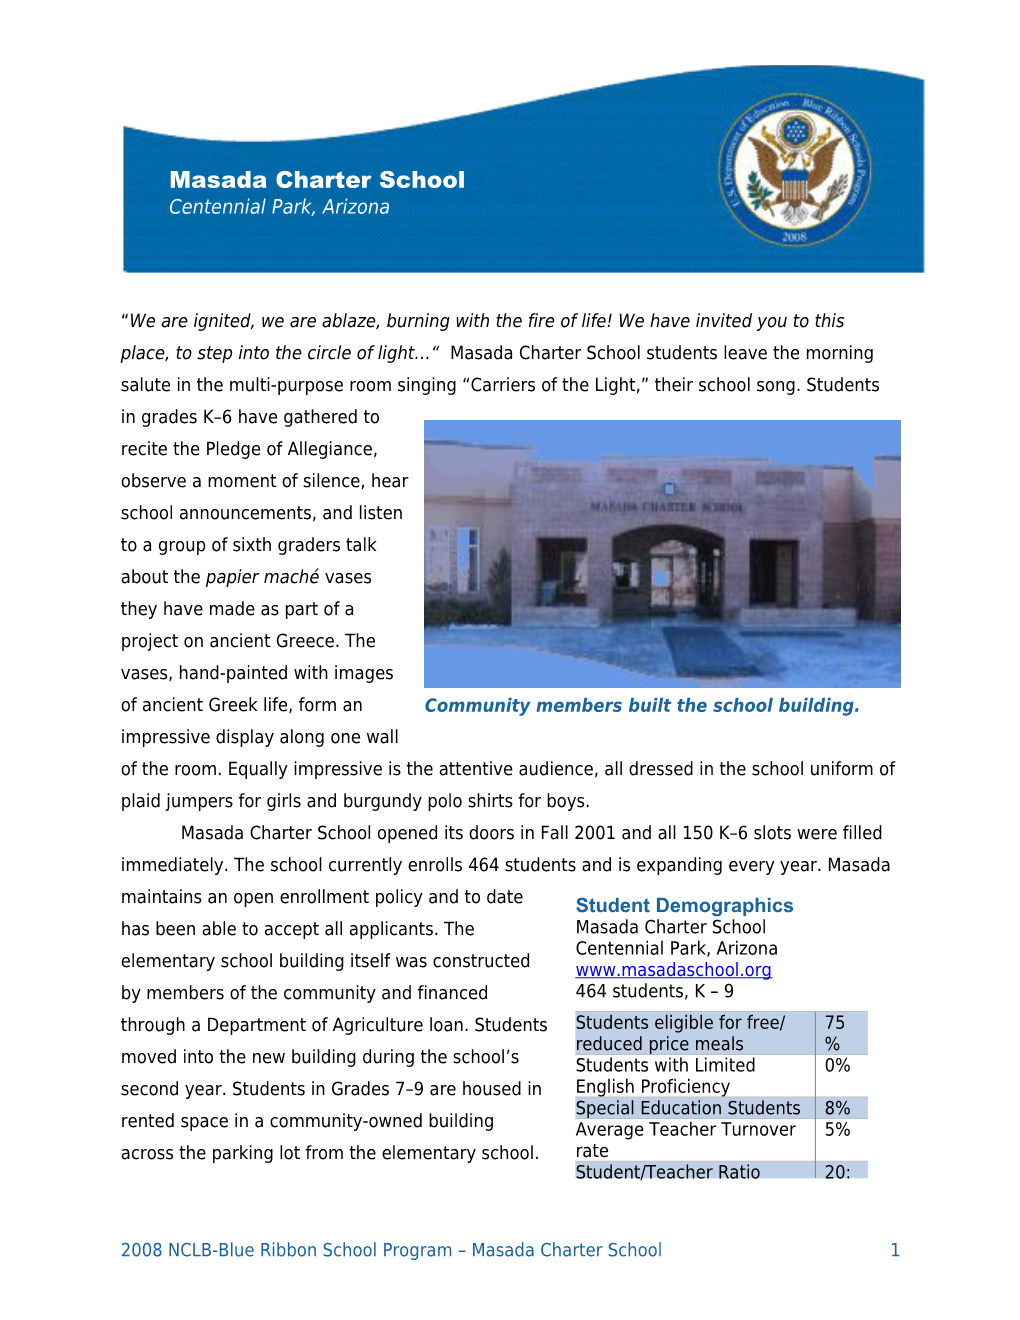 Profile of Masada Charter School, Centennial Park, AZ: a 2008 2008 Blue Ribbon Schools